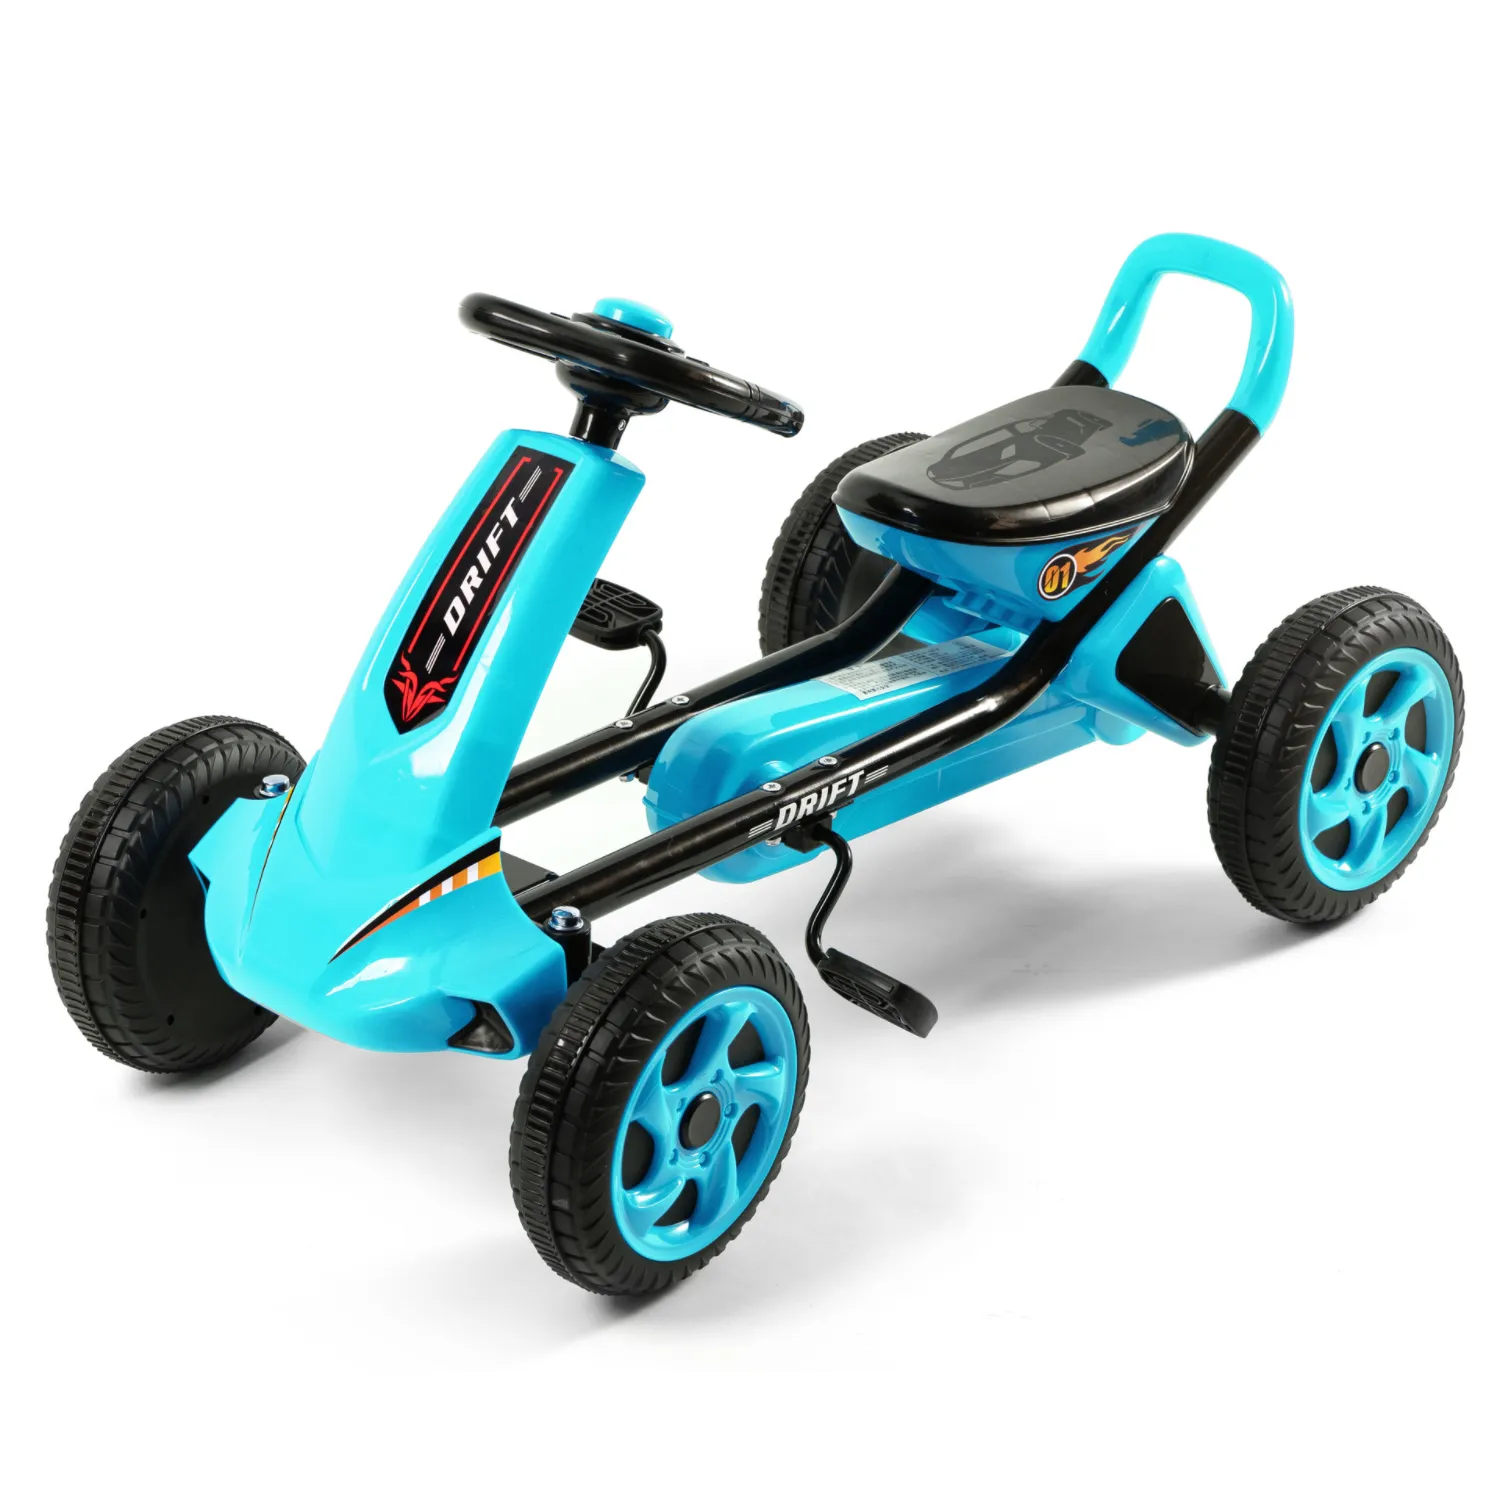 Kart Kart ארבעה גלגלים לילדים עם ארבעה גלגלים עם מרכז קניות פדלים